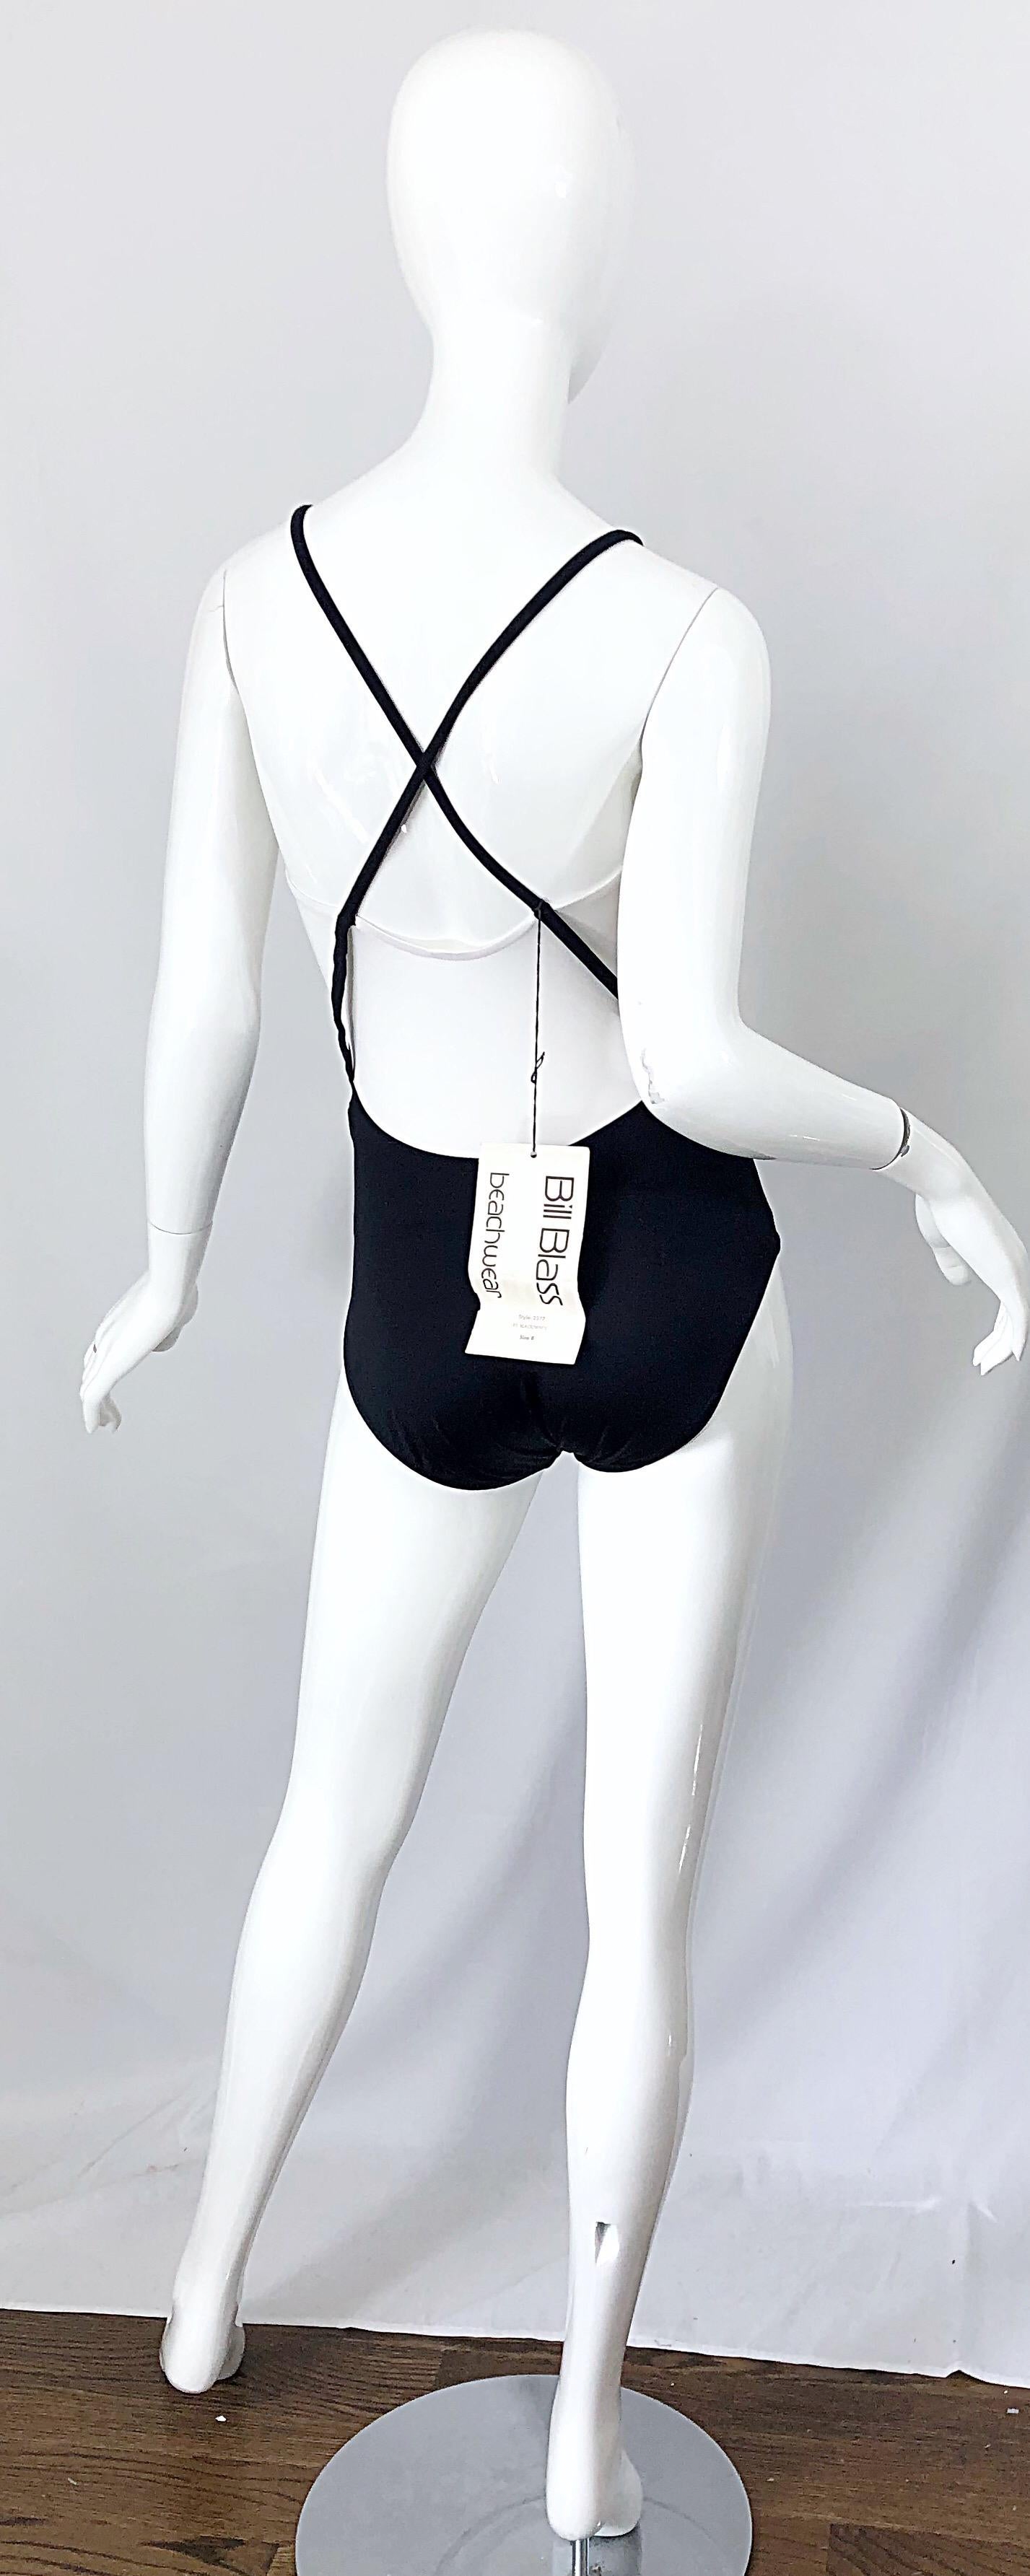 Gray NWT Bill Blass 1980s Sz 8 Trompe l'oeil Black and White 80s Swimsuit Bodysuit